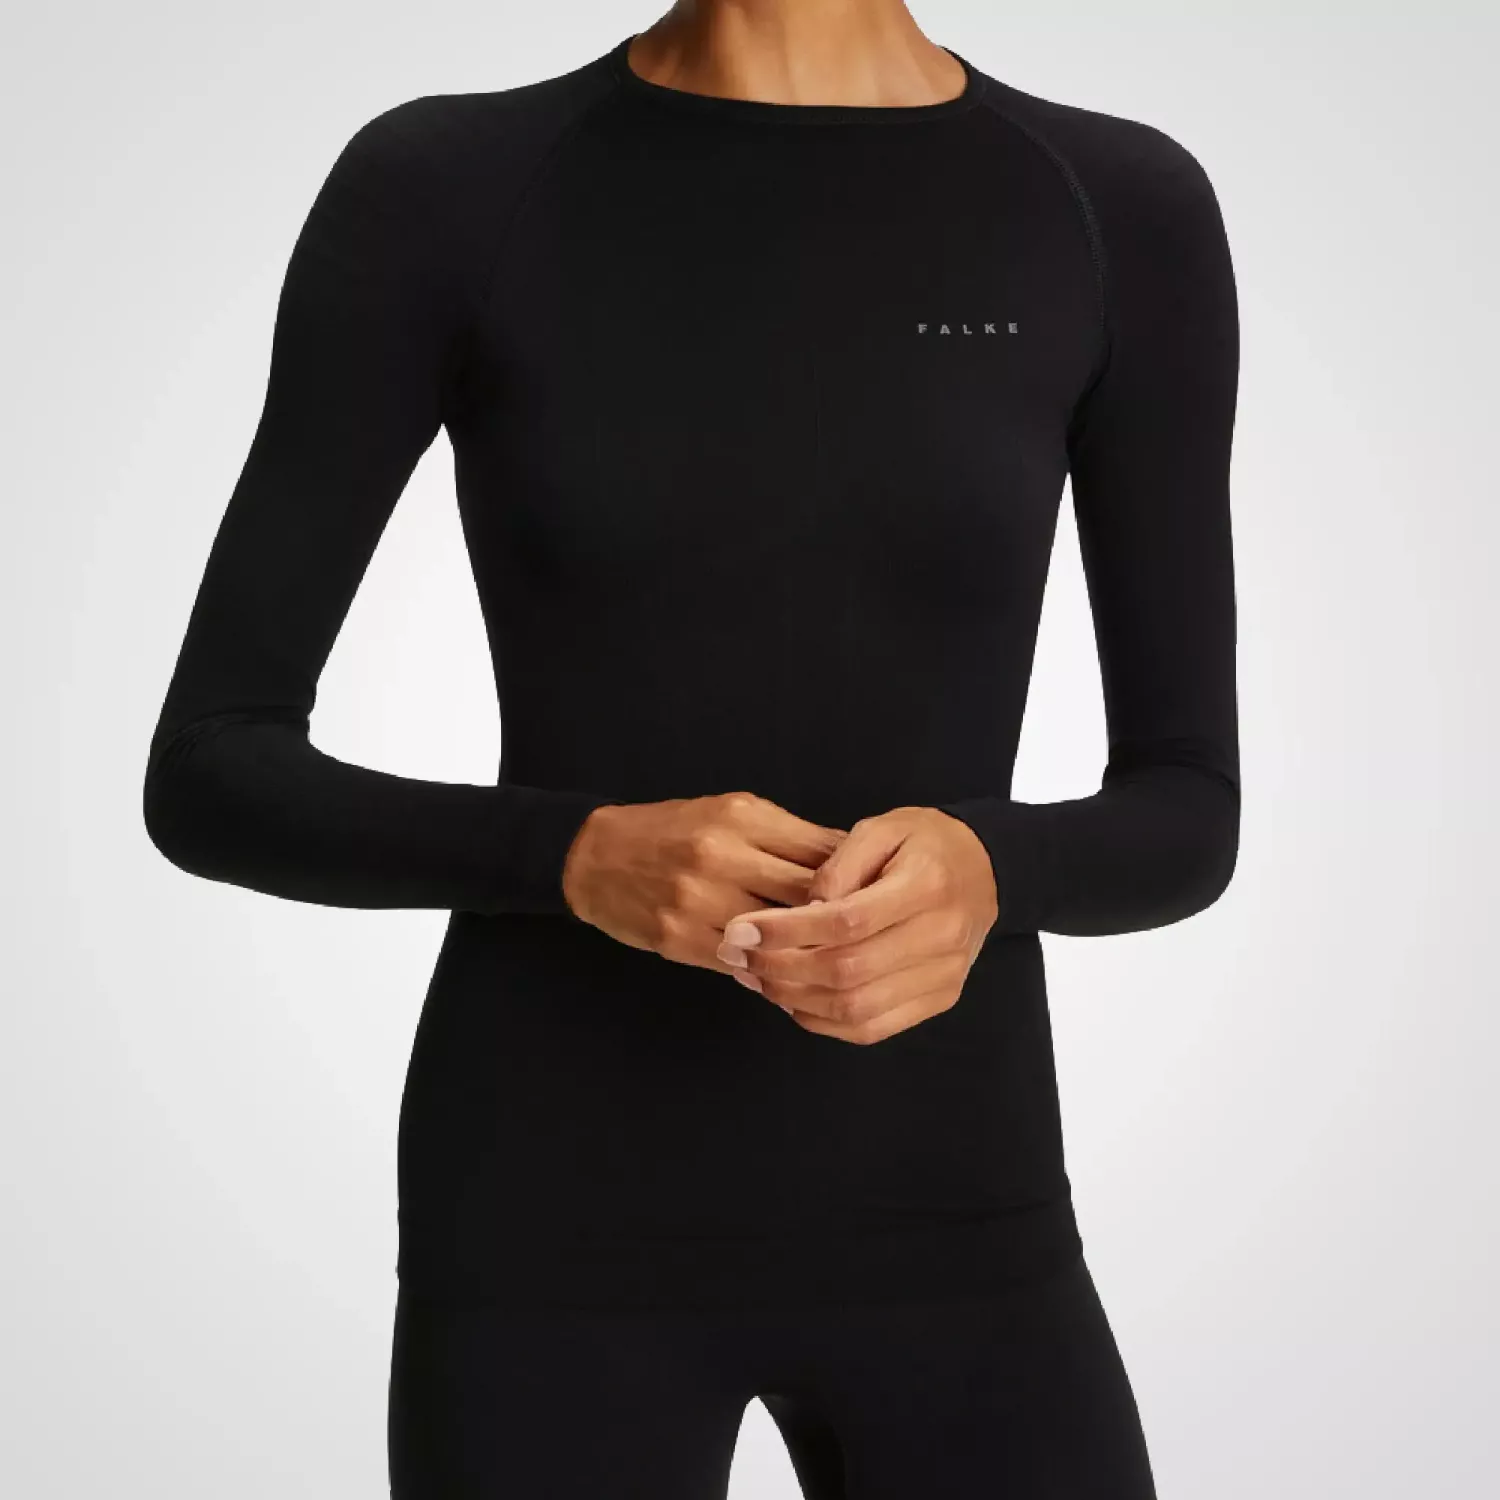 Falke - Warm Longsleeved Shirt Tight Women - Black XL